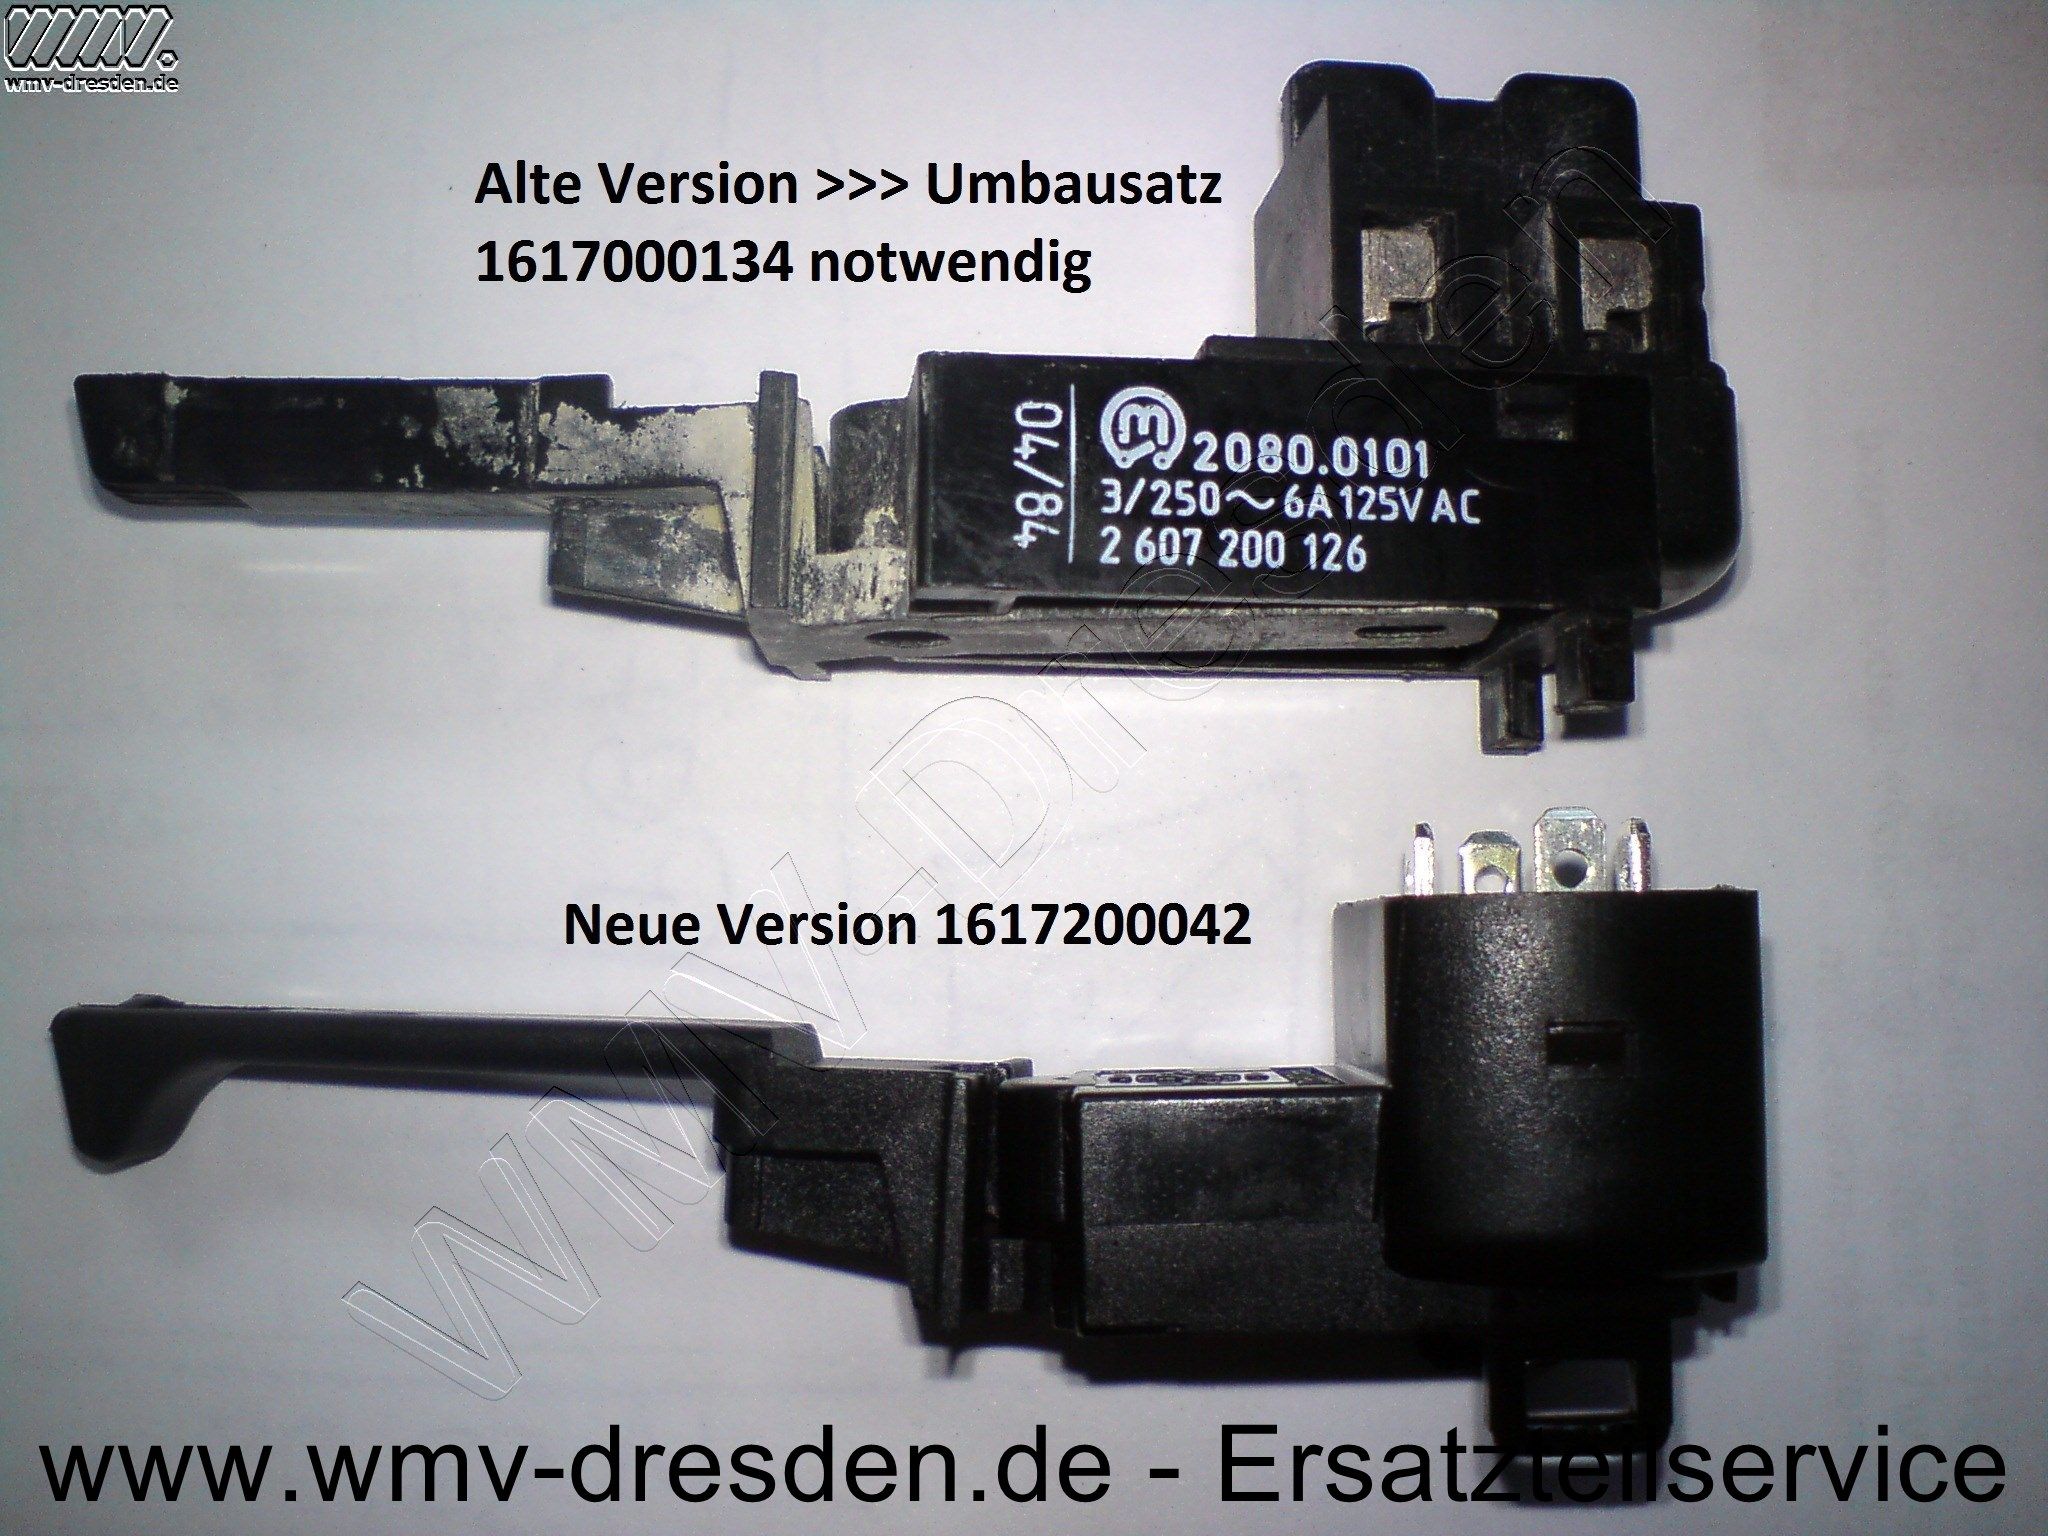 Artikel 1617000134-B17 Hersteller: Bosch-Skil-Dremel 